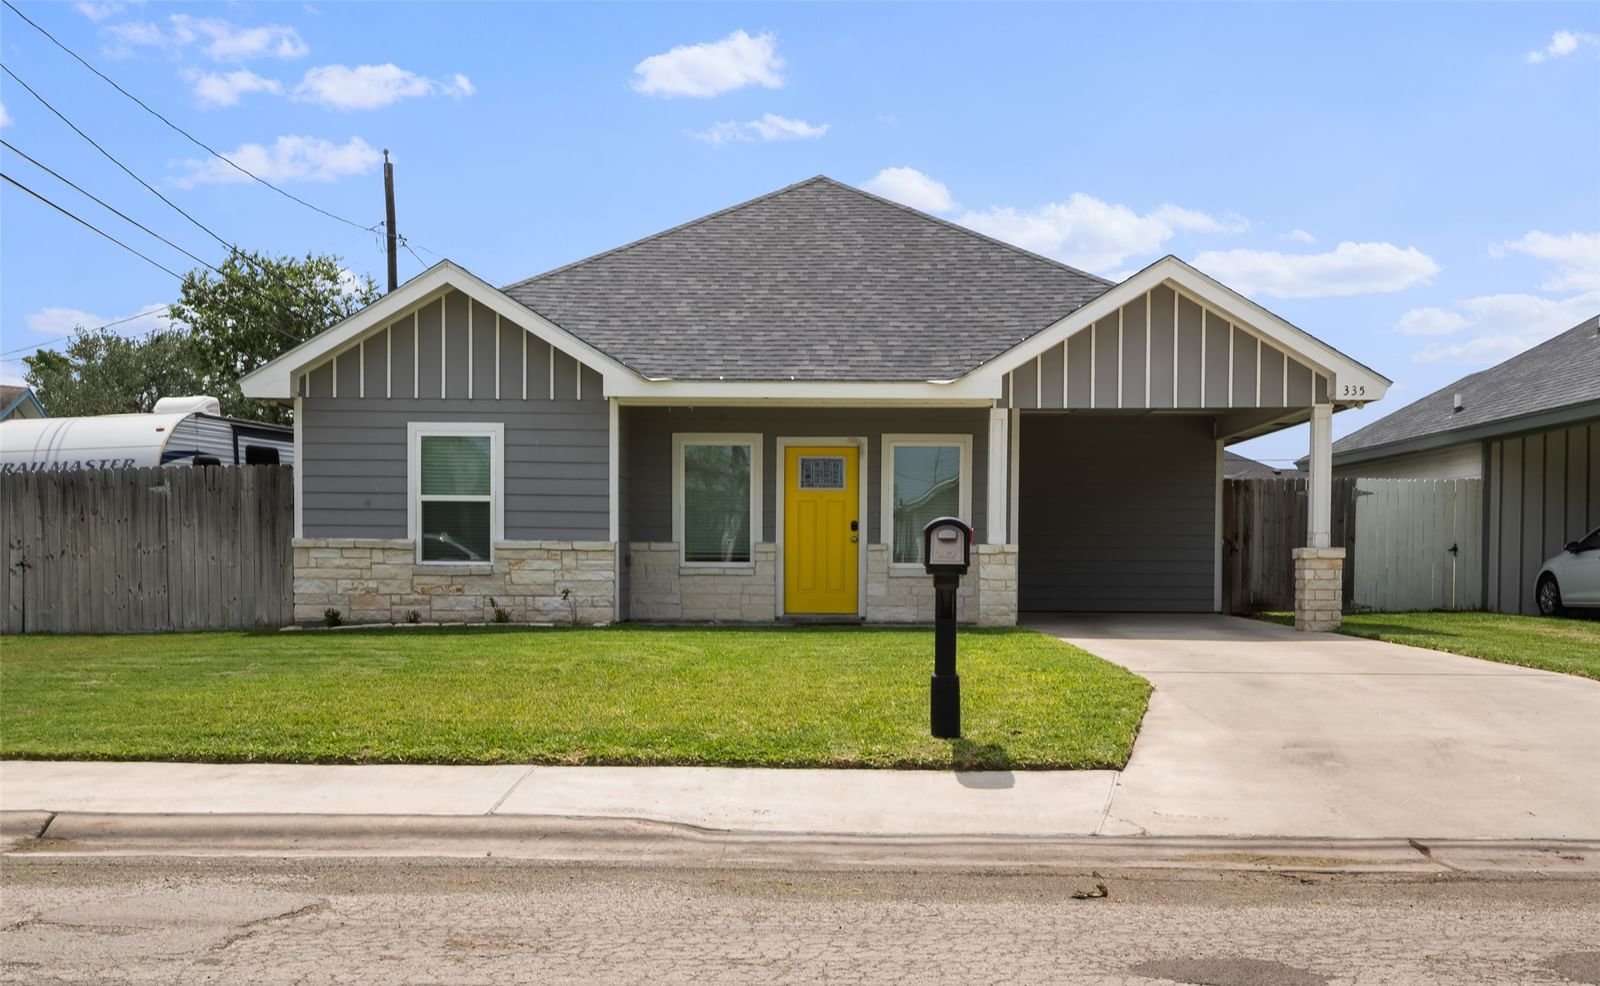 Real estate property located at 335 16th, Kleberg, Torres Estates, Kingsville, TX, US